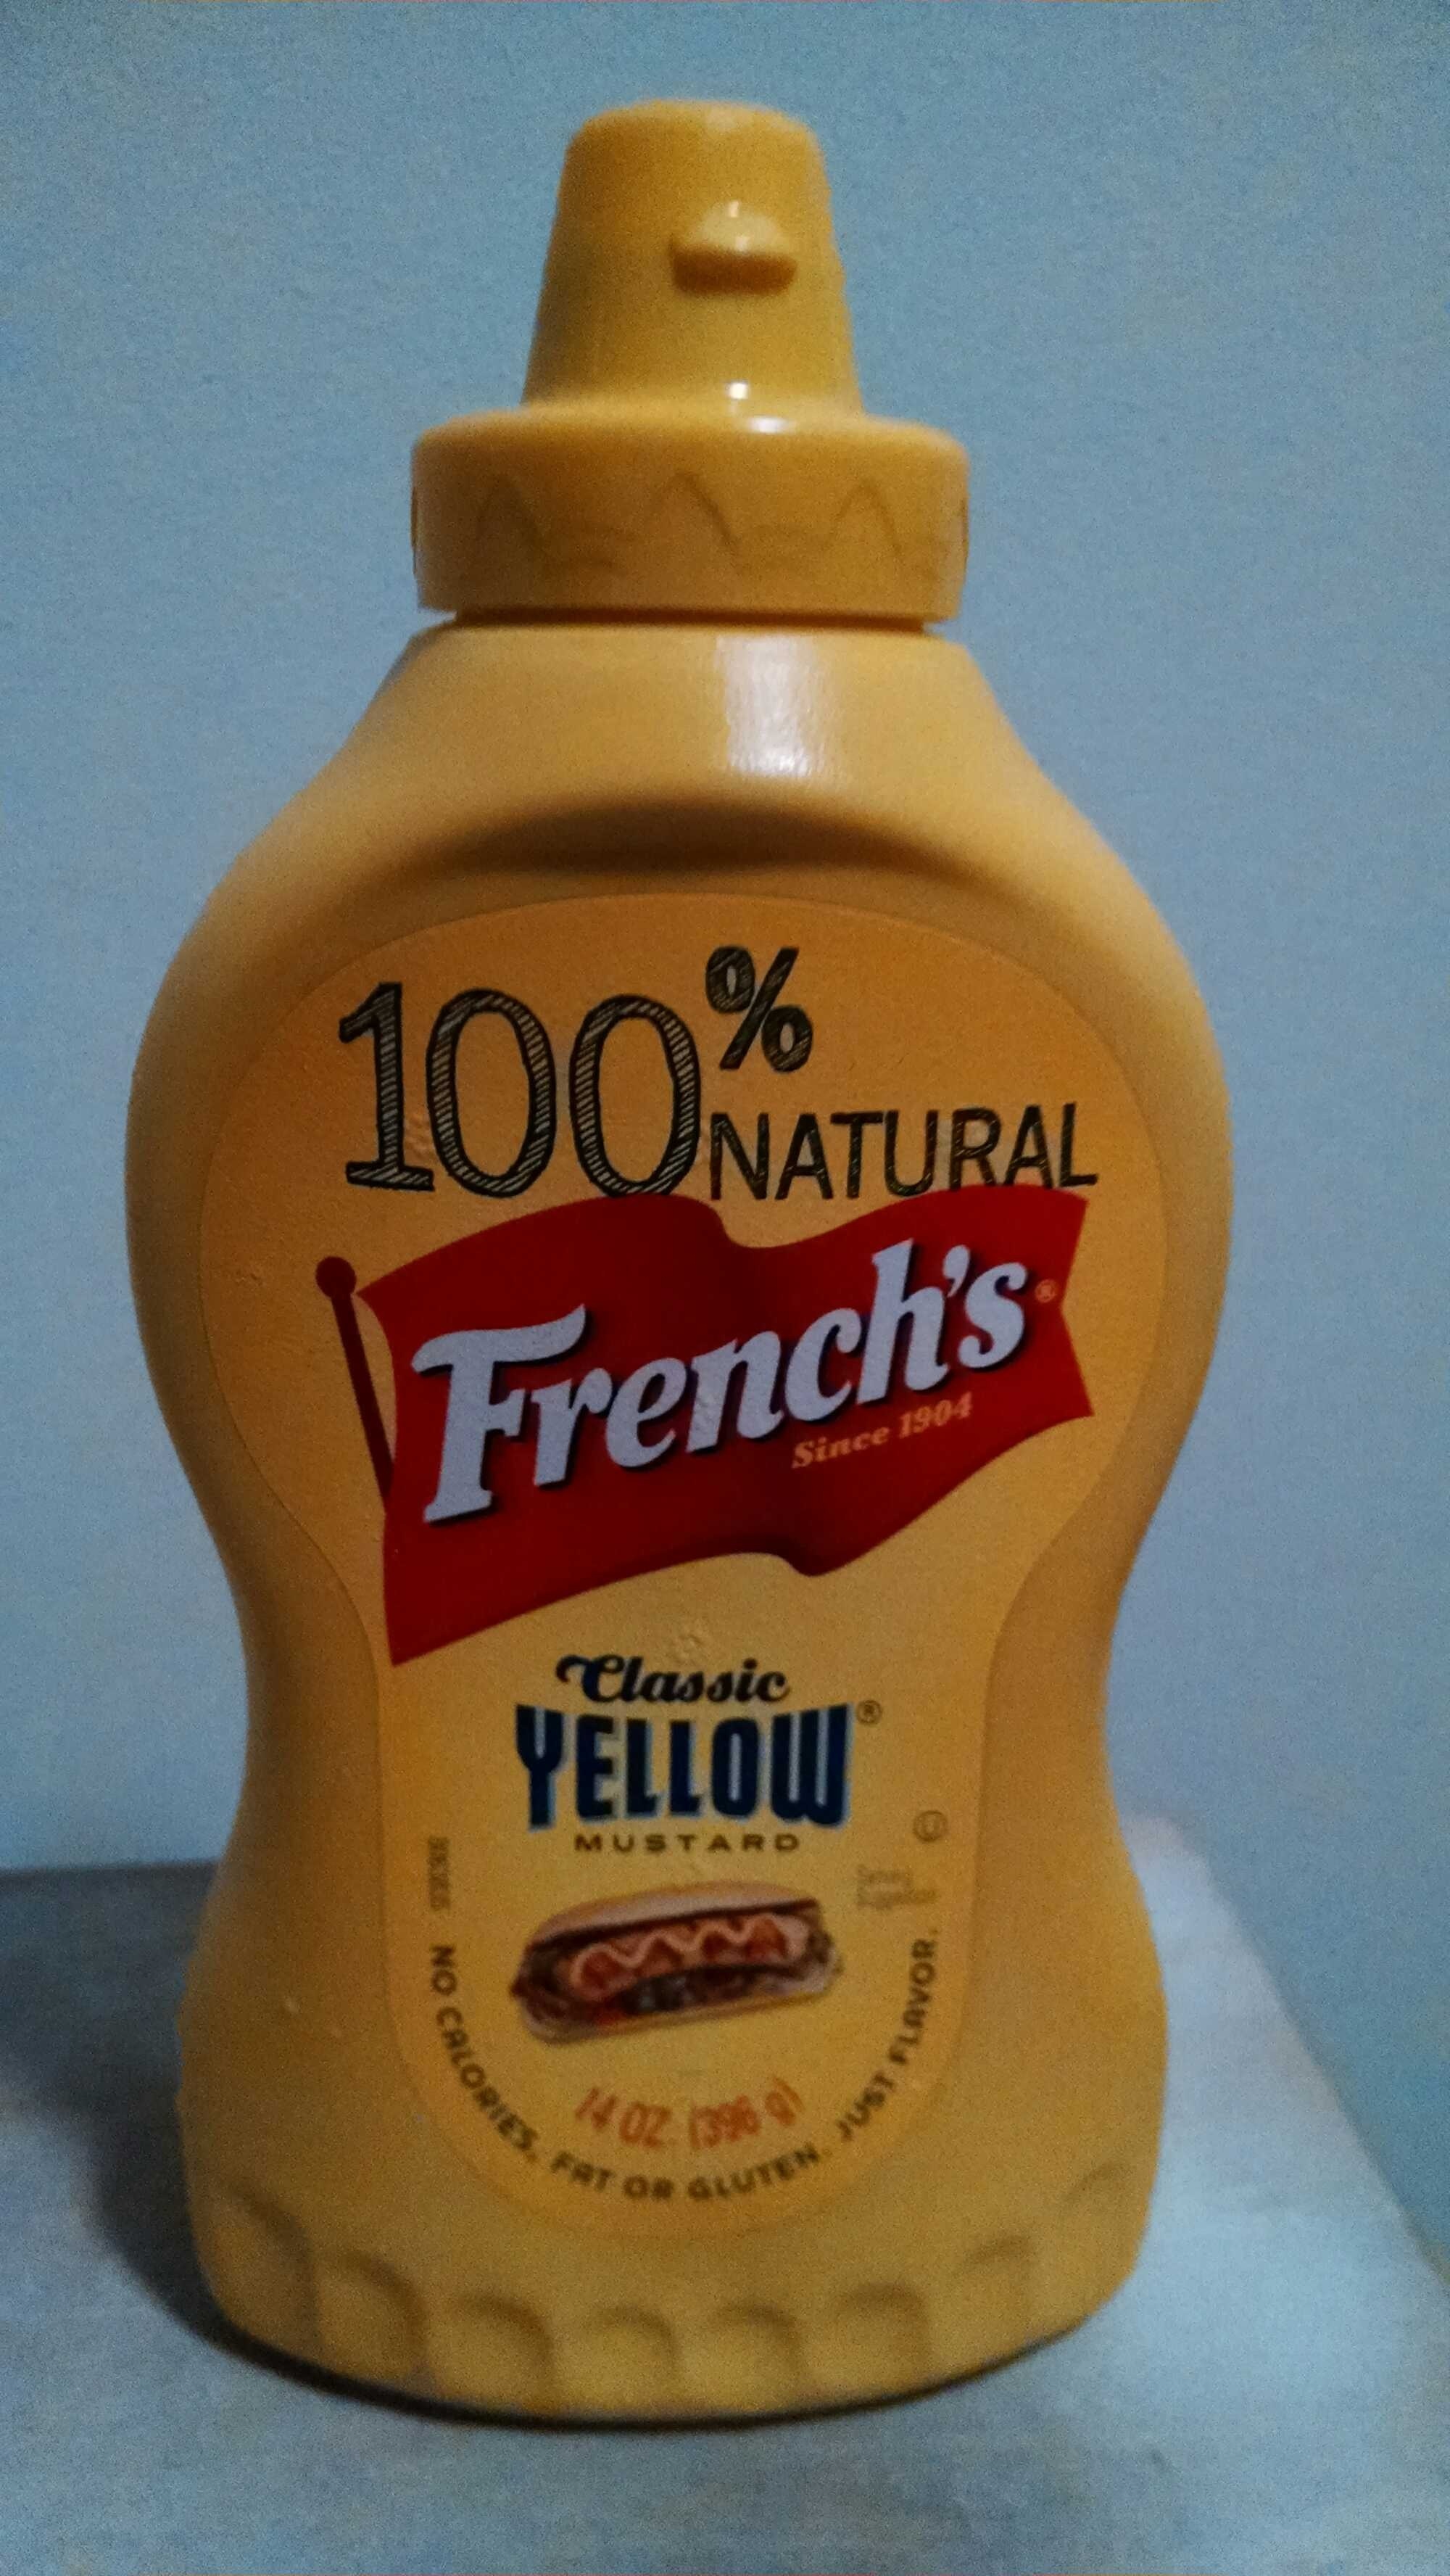 Classic Yellow Mustard - Produit - en